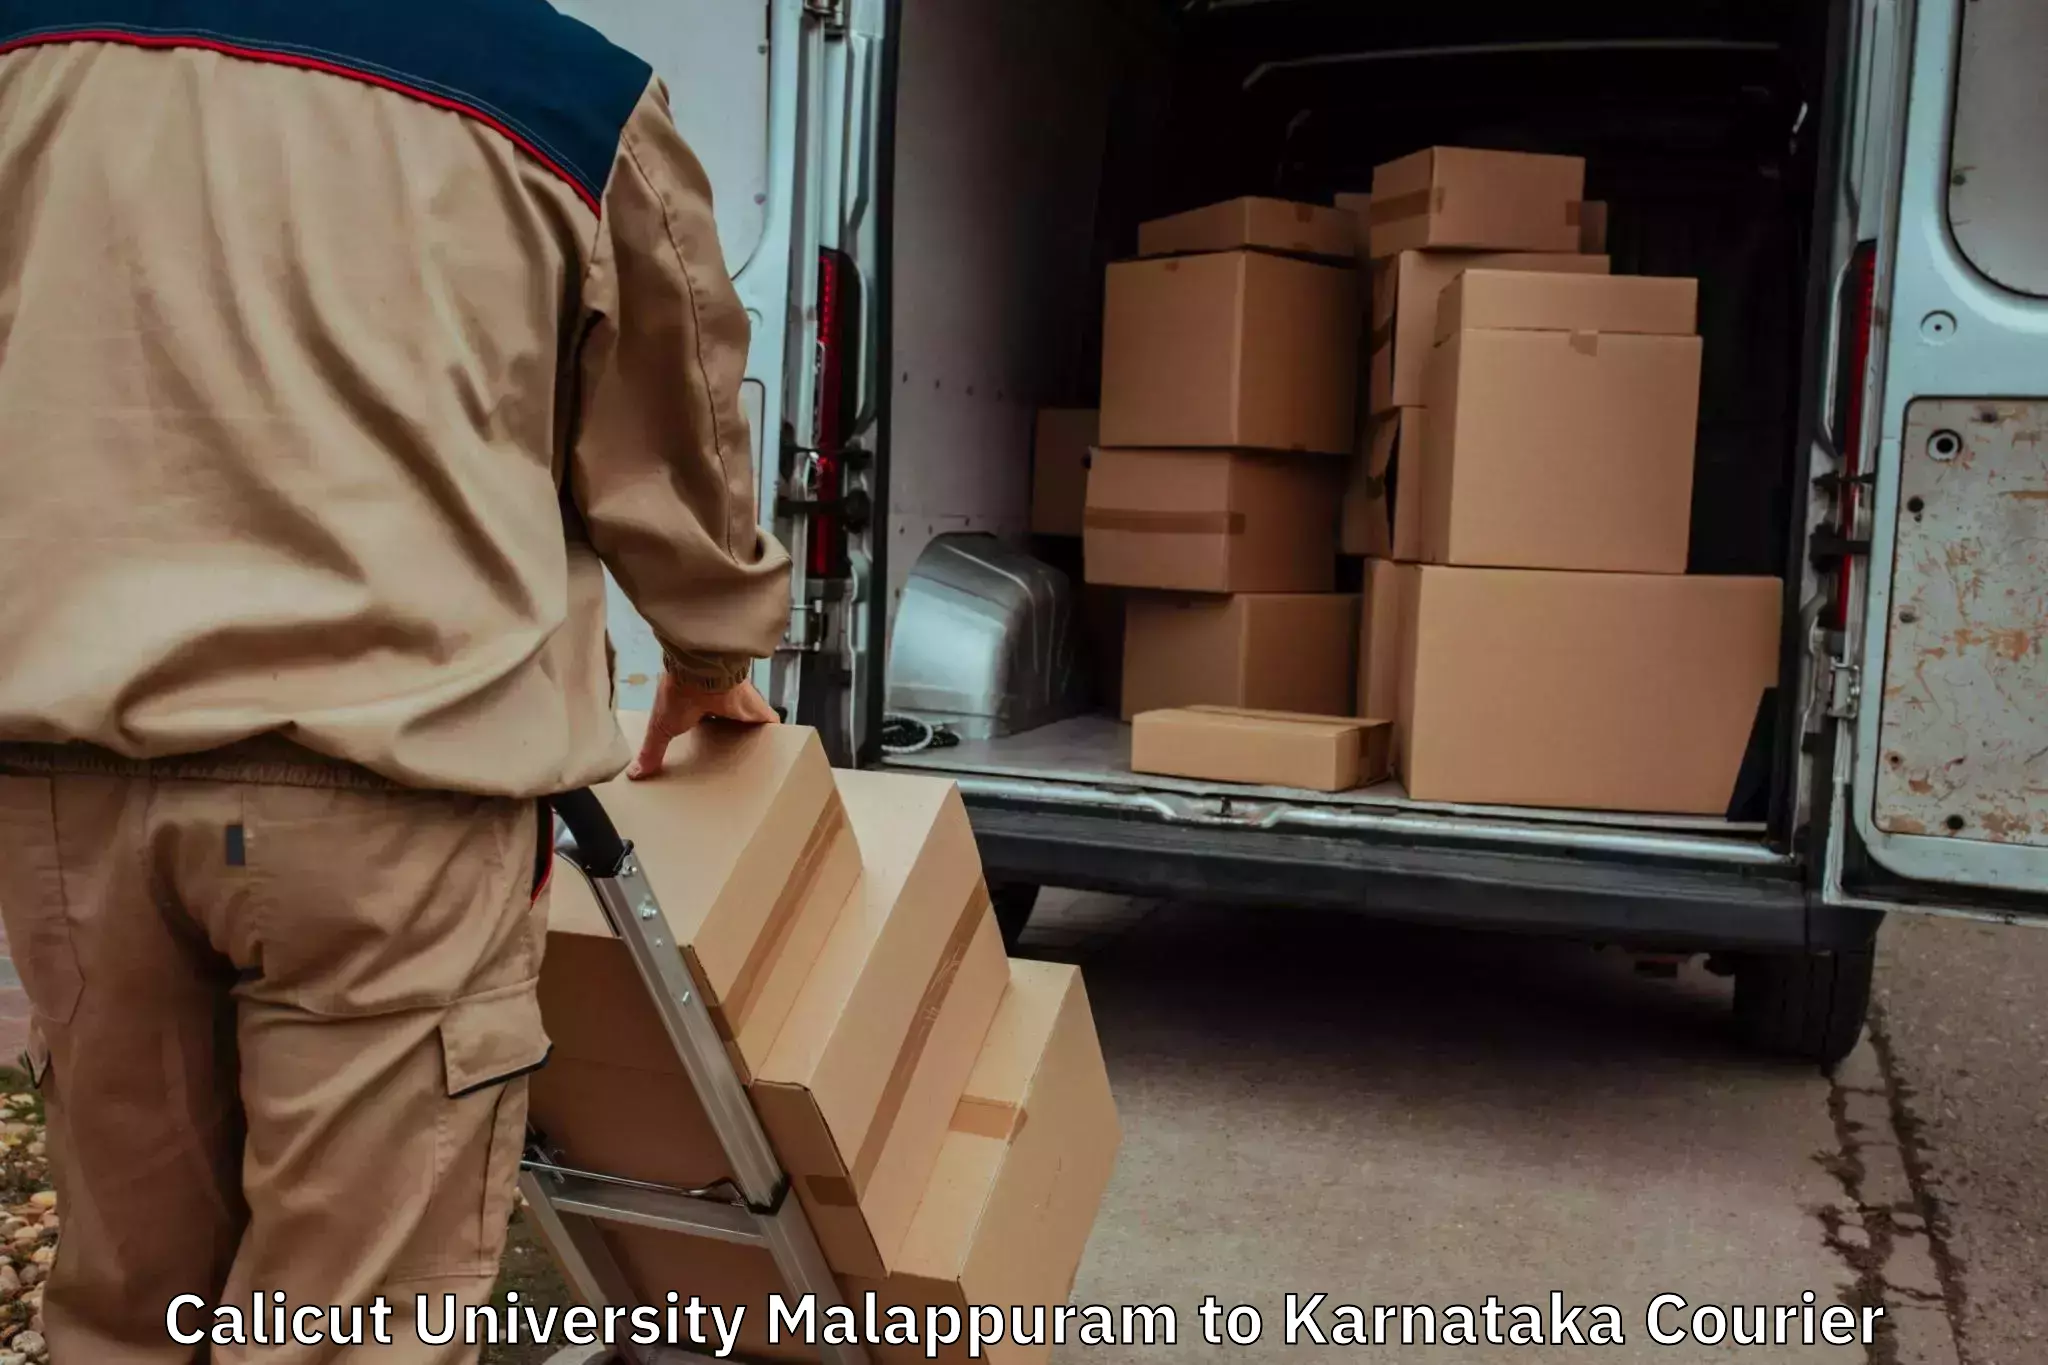 Furniture moving specialists Calicut University Malappuram to Karwar